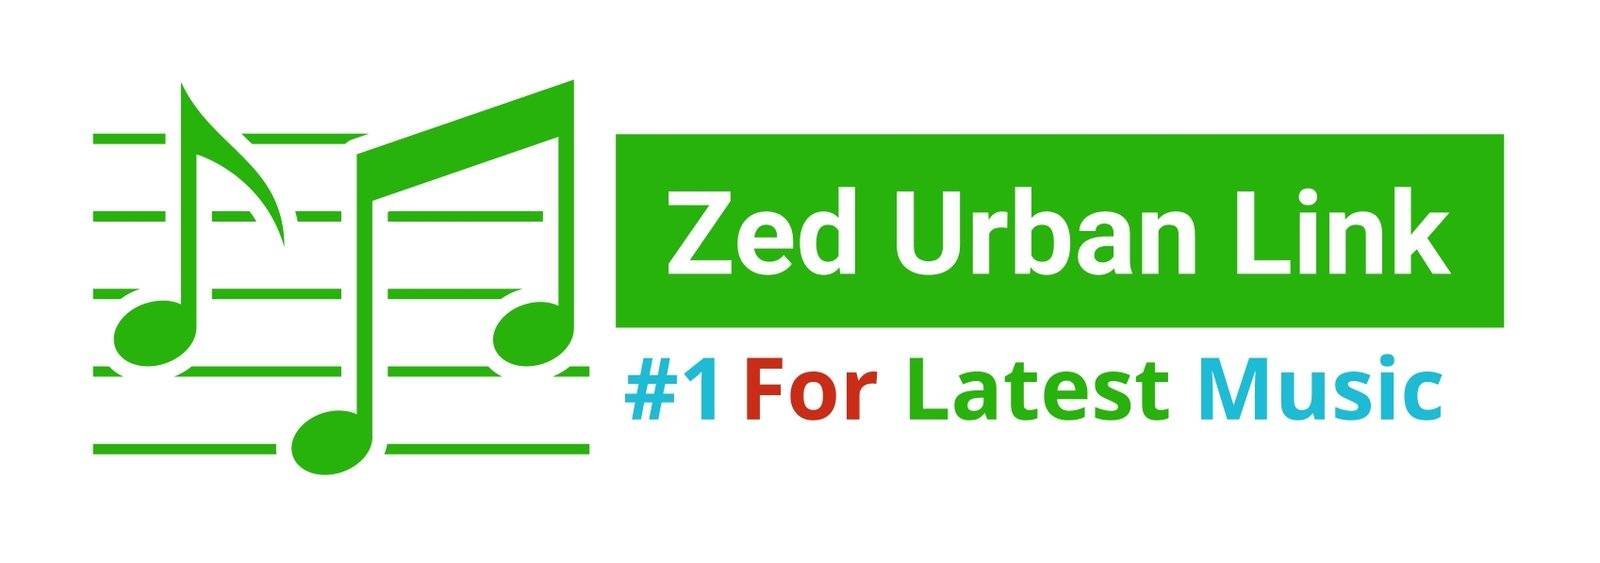 Zed Urban Link 